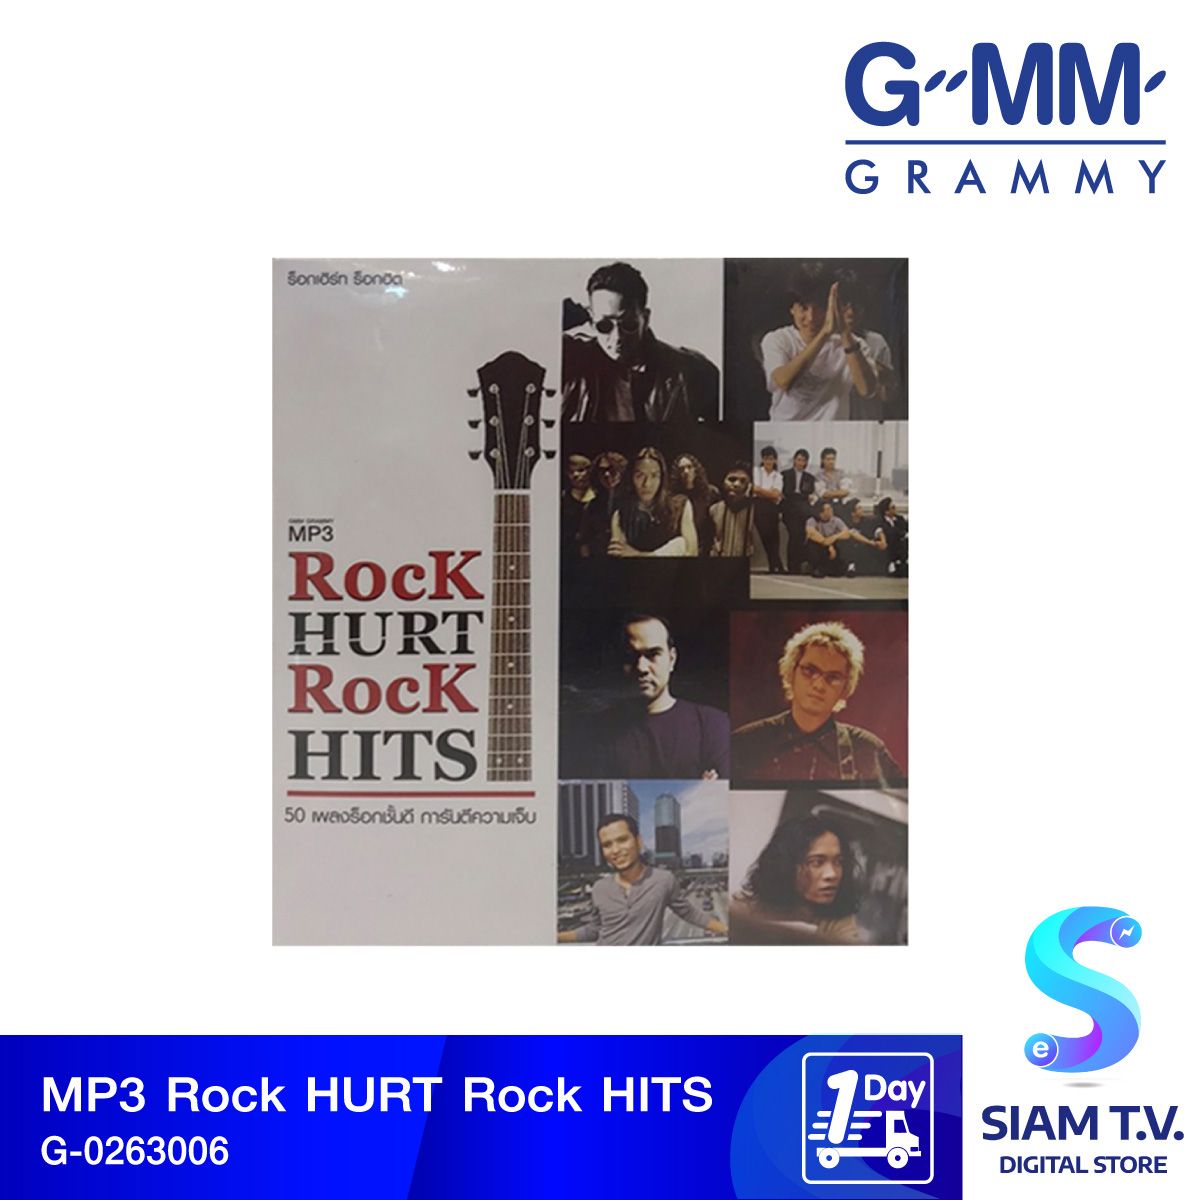 GMM GRAMMY MP3 ROCK HURT ROCK HITS